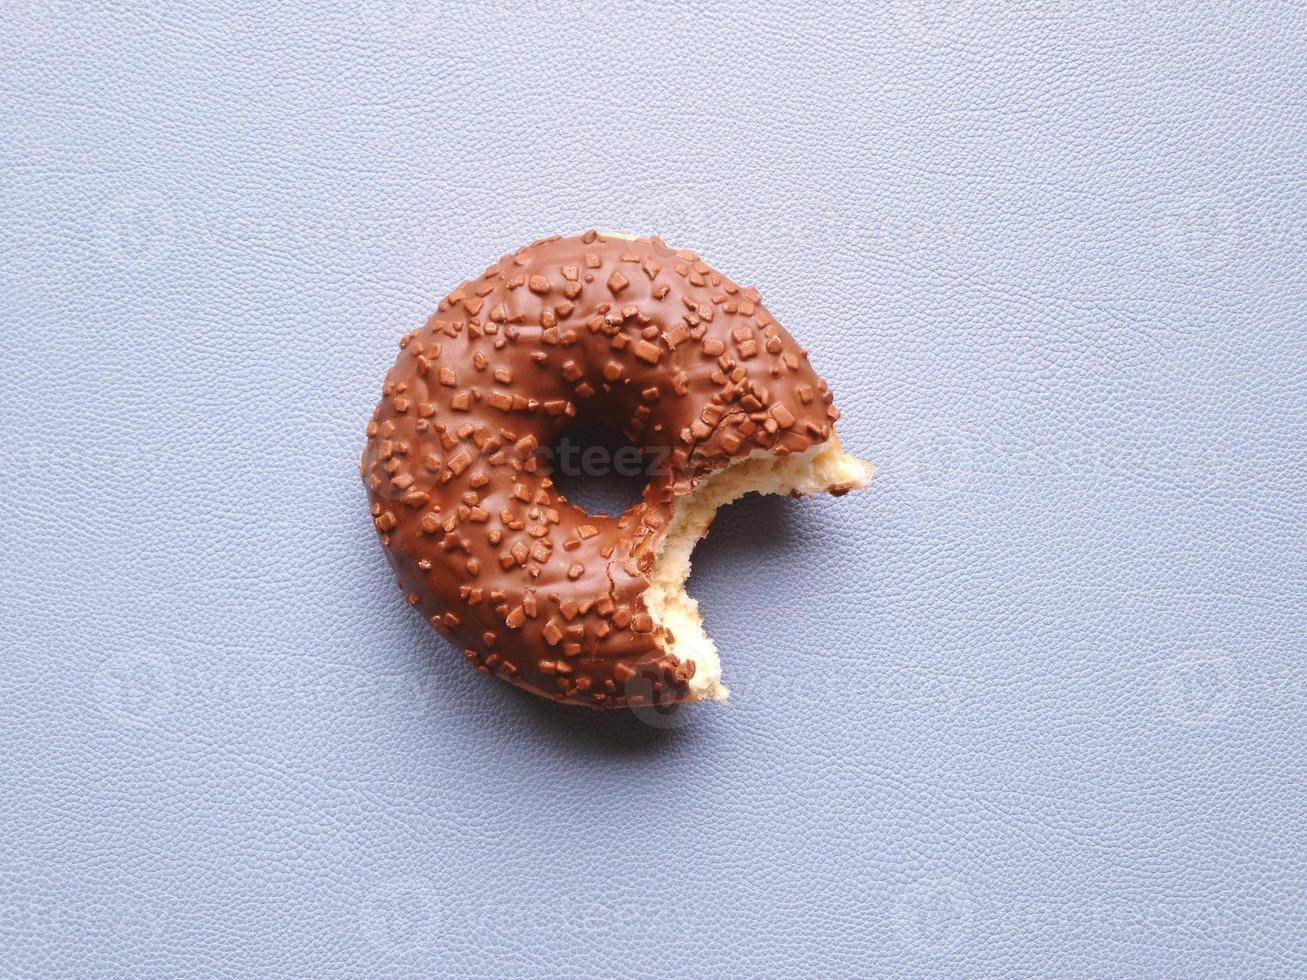 chocolate glazed donut or doughnut with bite missing photo